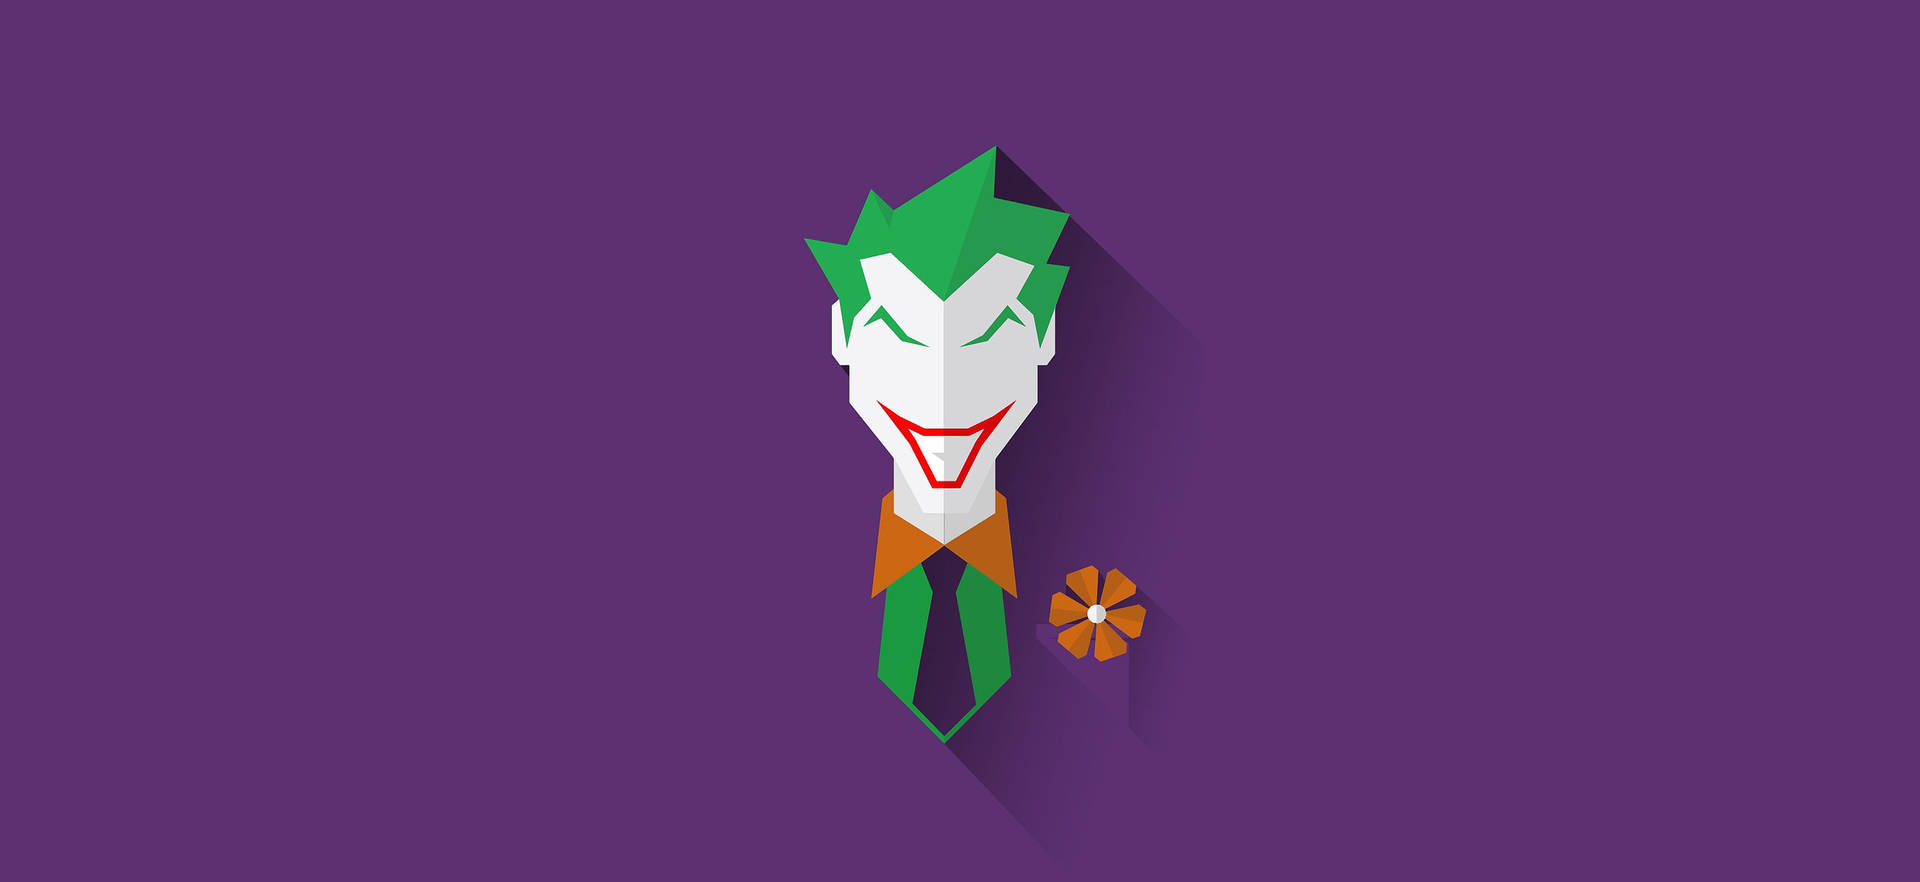 2800X1286 Joker Wallpaper and Background